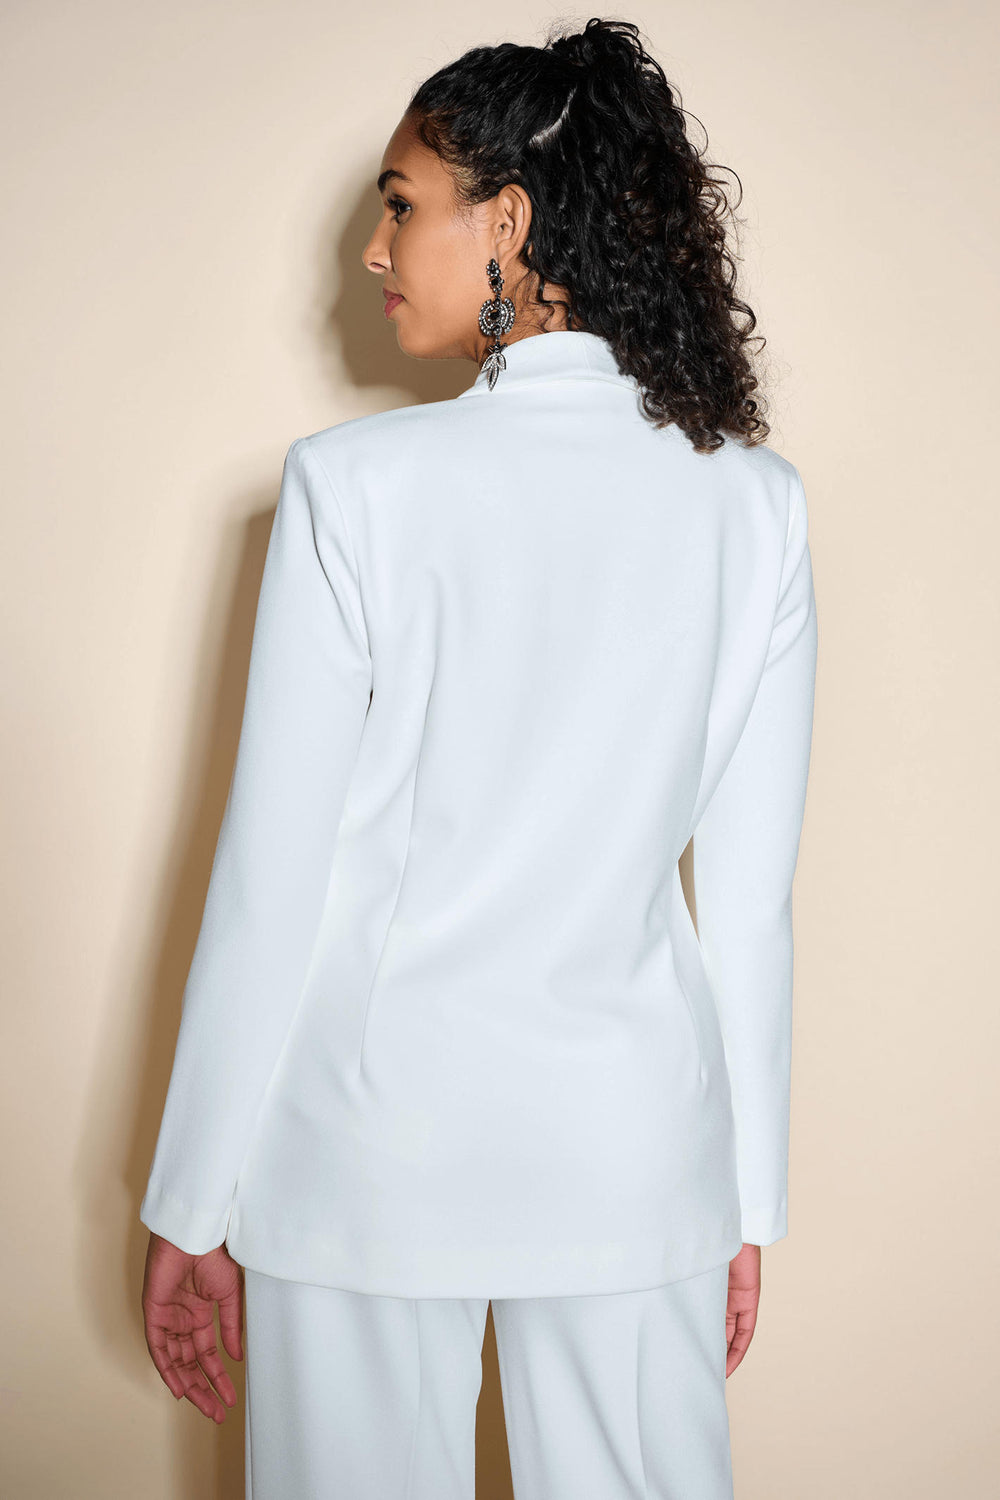 Joseph Ribkoff 233786 Vanilla White One Button Jacket - Olivia Grace Fashion